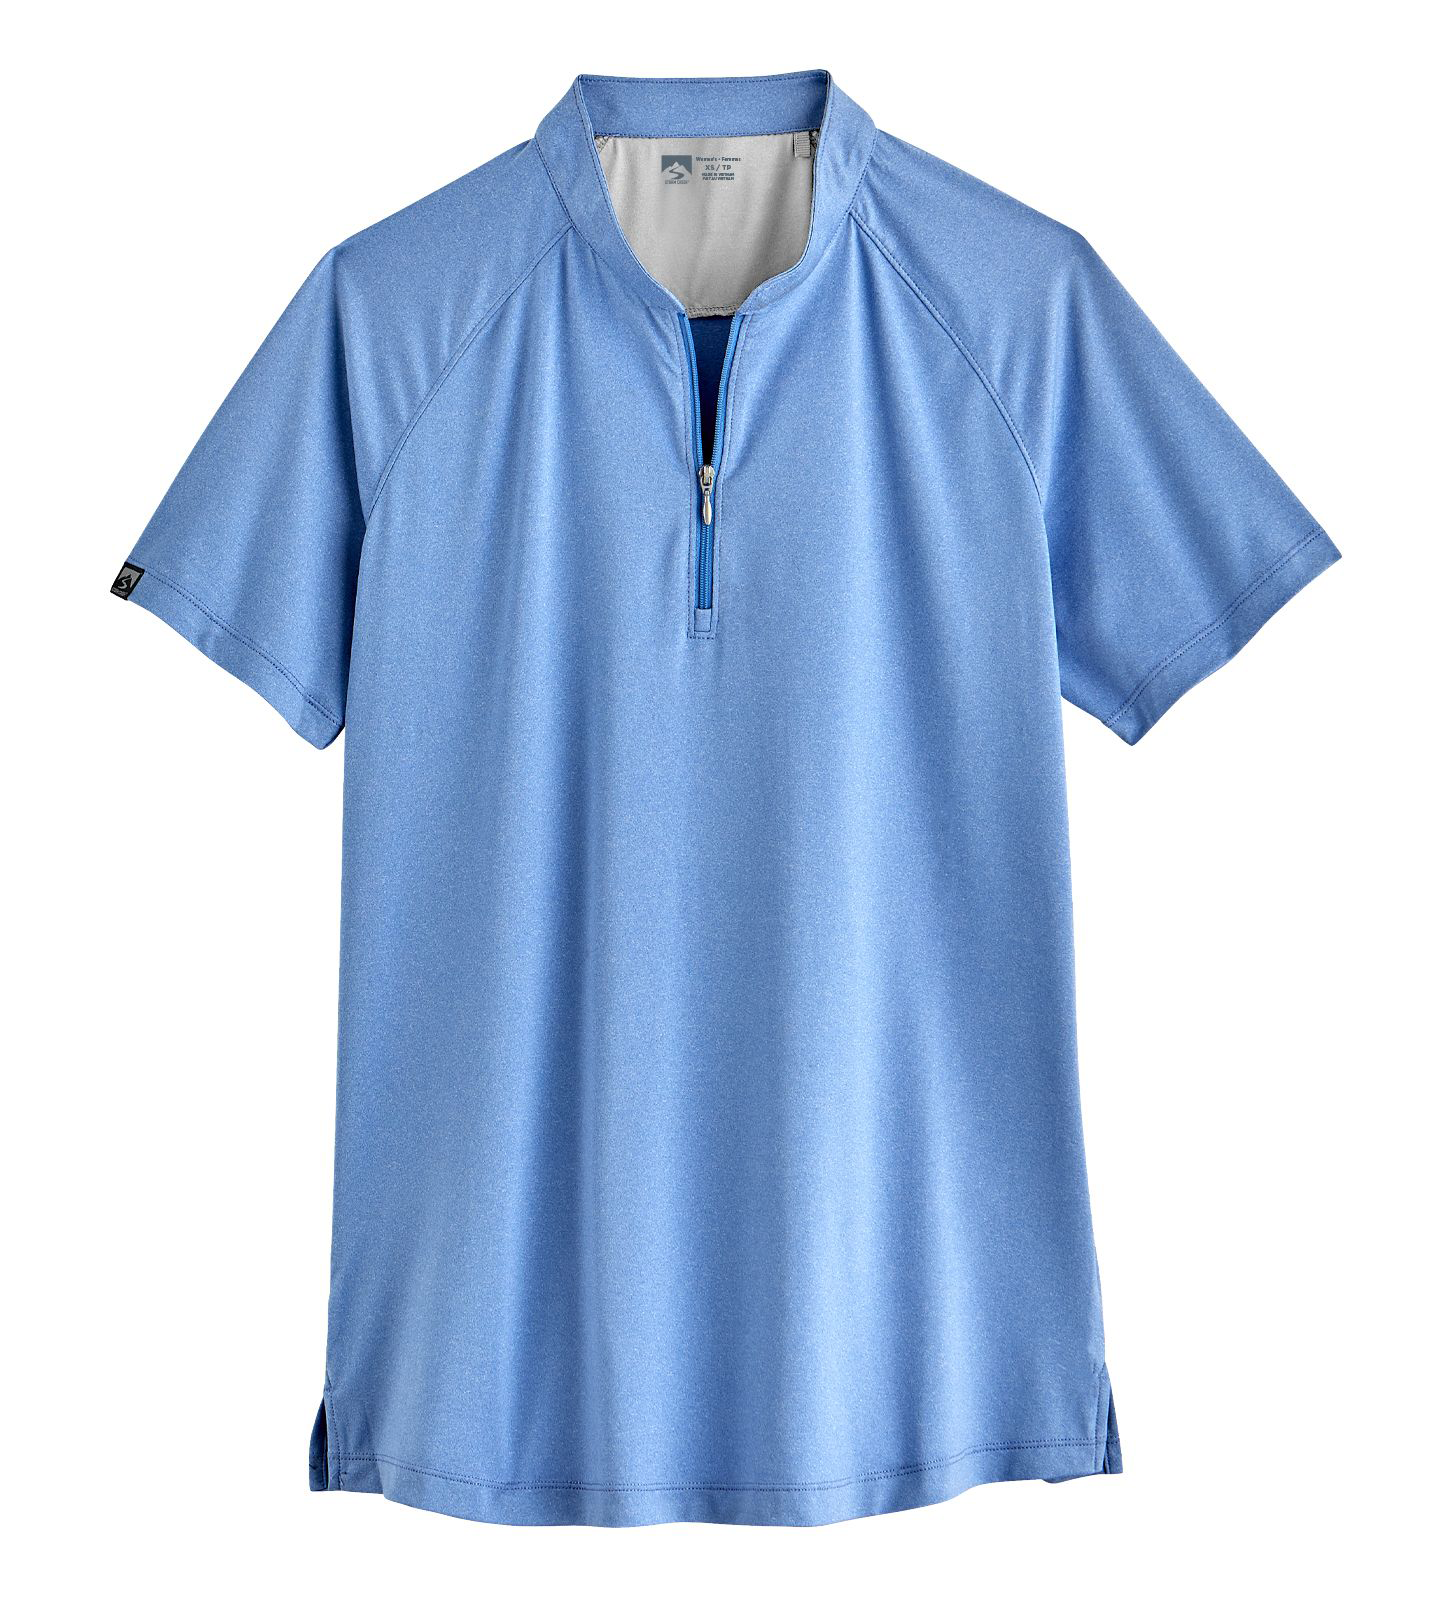 Storm Creek Visionary Polo Short-Sleeve Shirt for Ladies